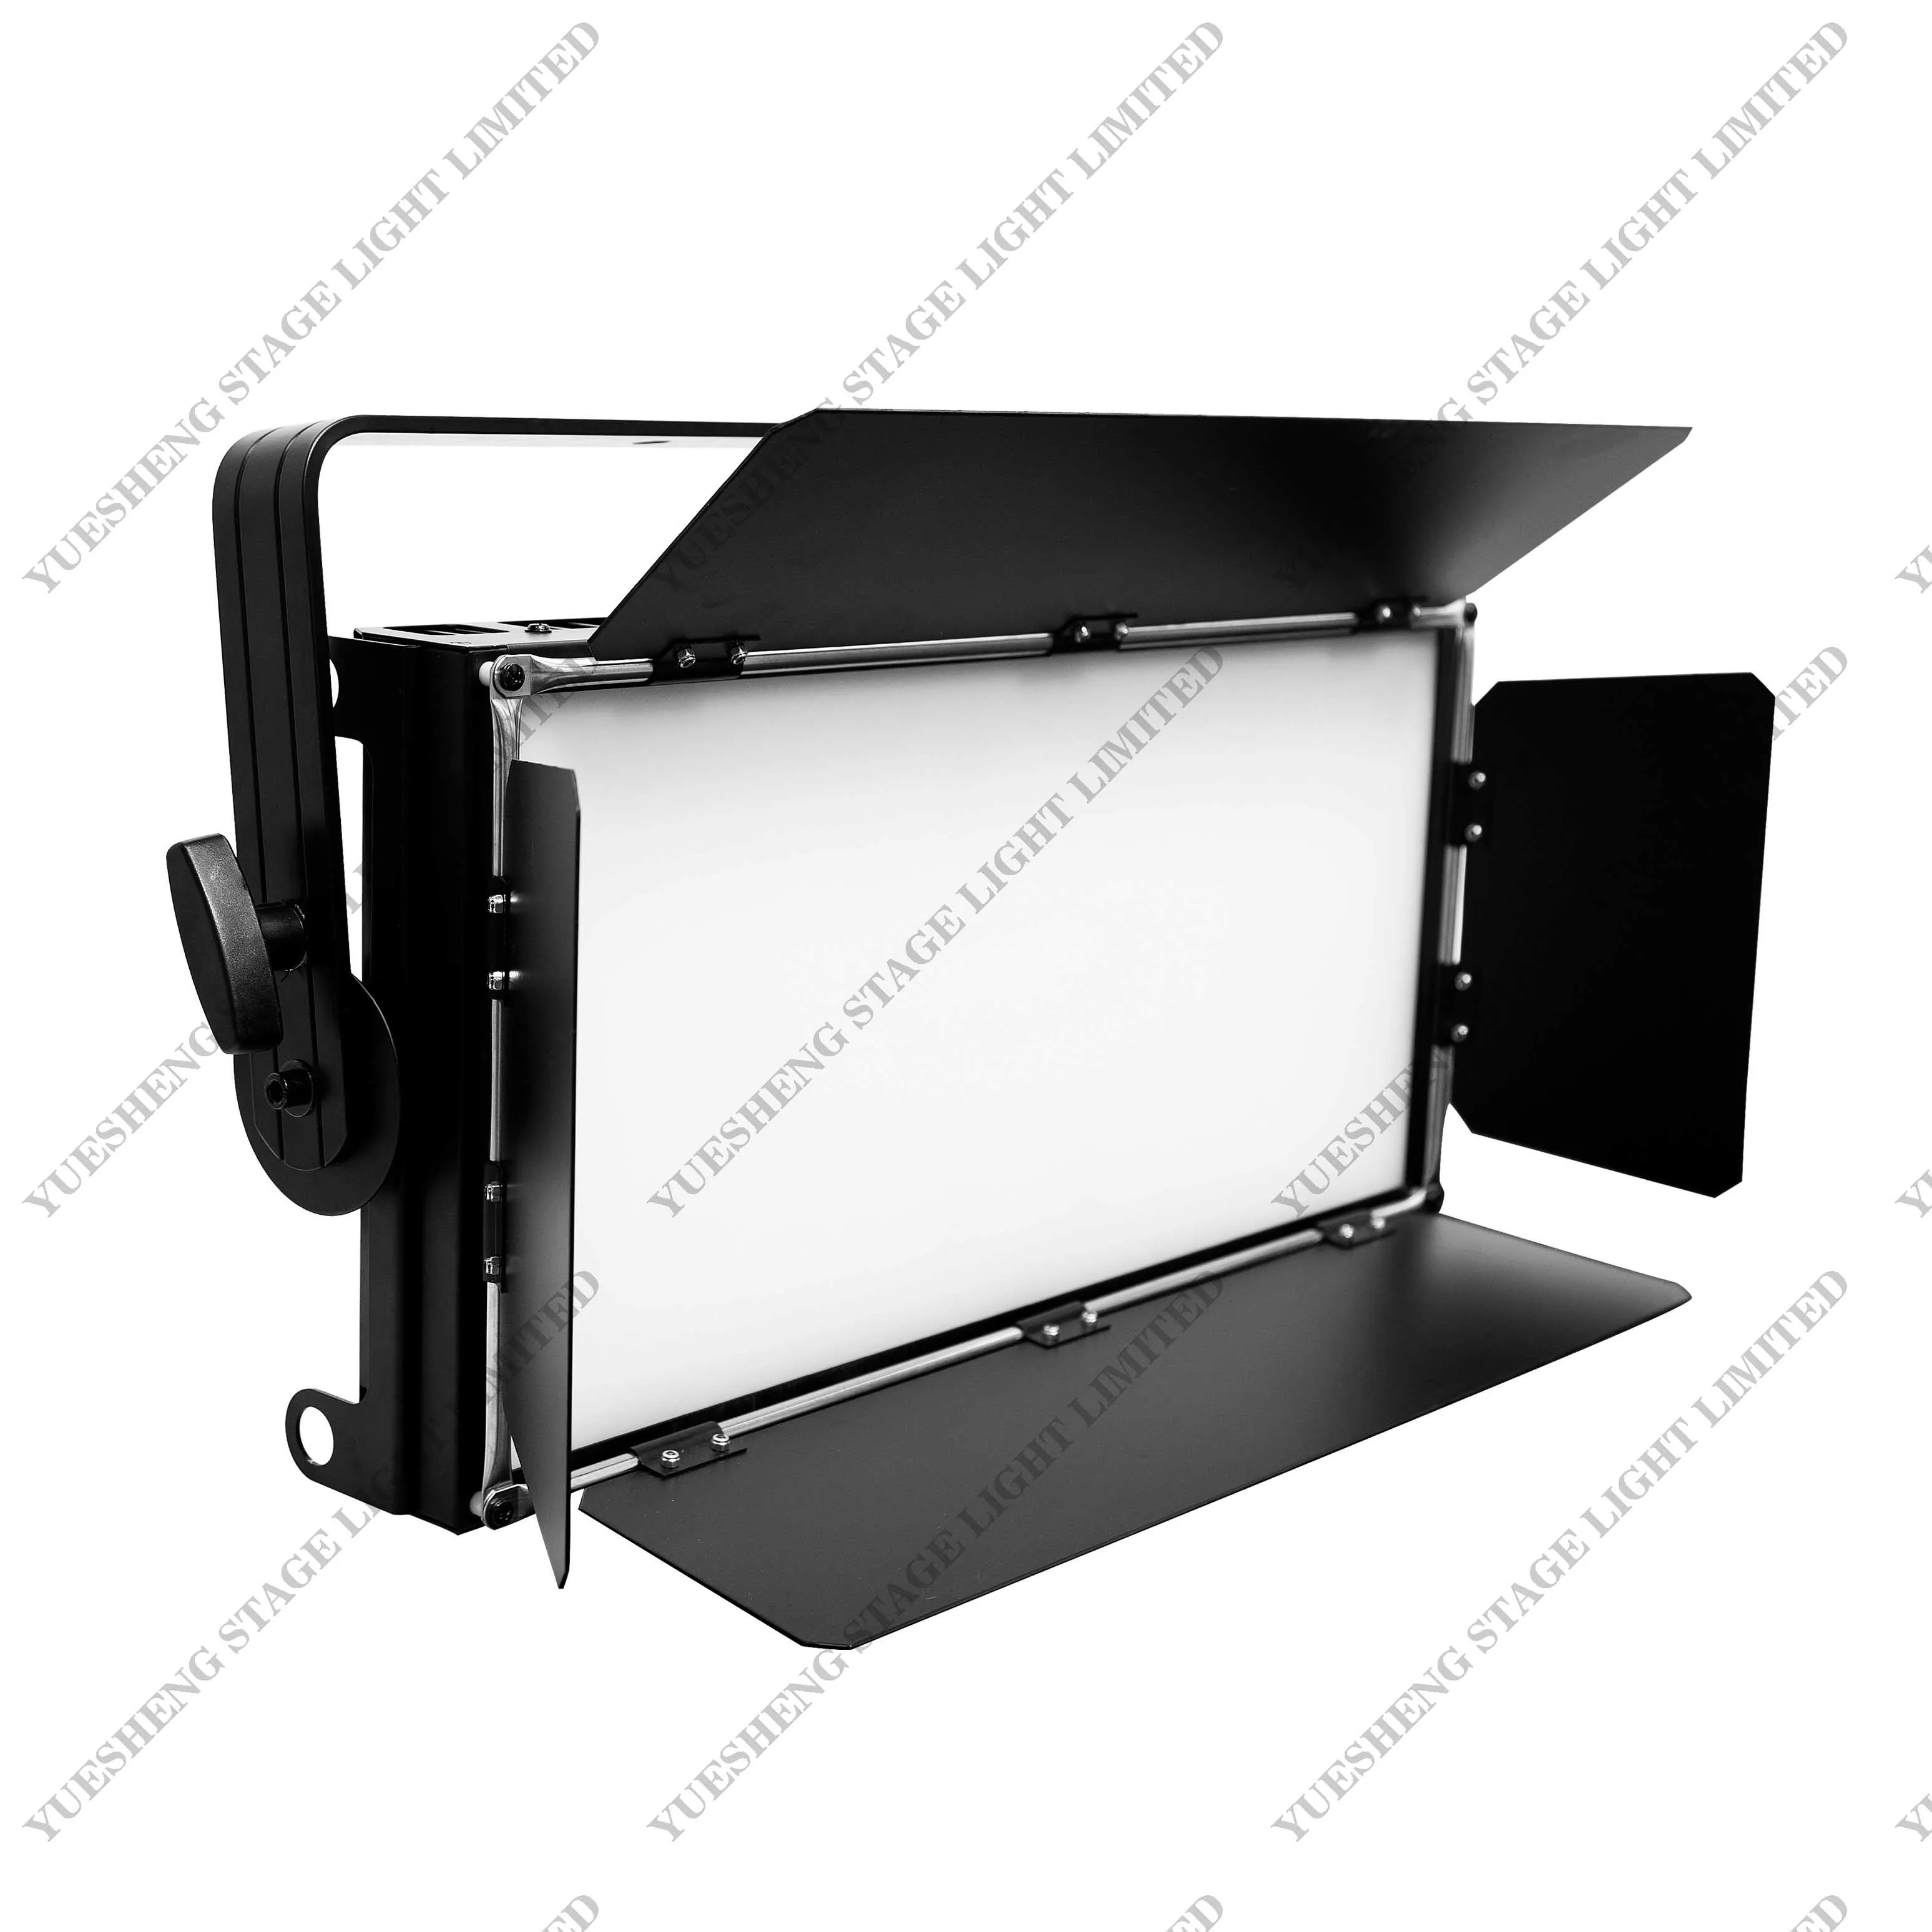 Photography Studio Flat Panel Led Video Light Factory Price